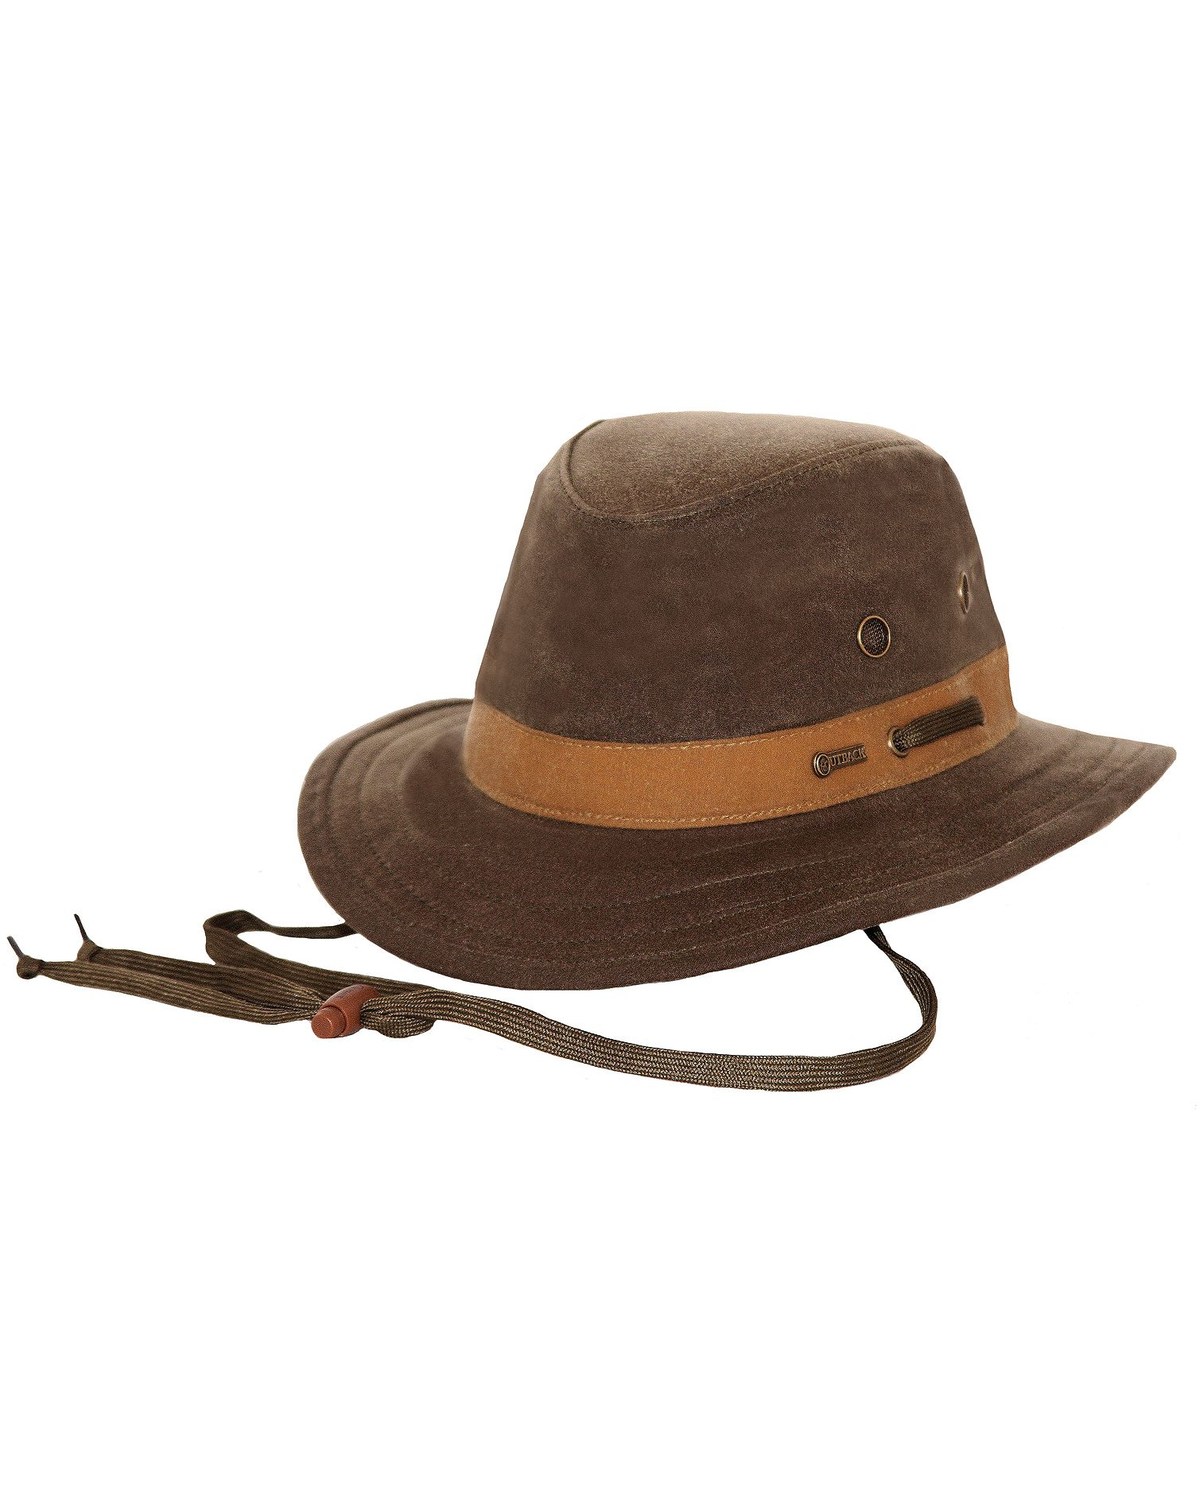 Outback Trading Co. Men's Oilskin Willis Crushable Hat